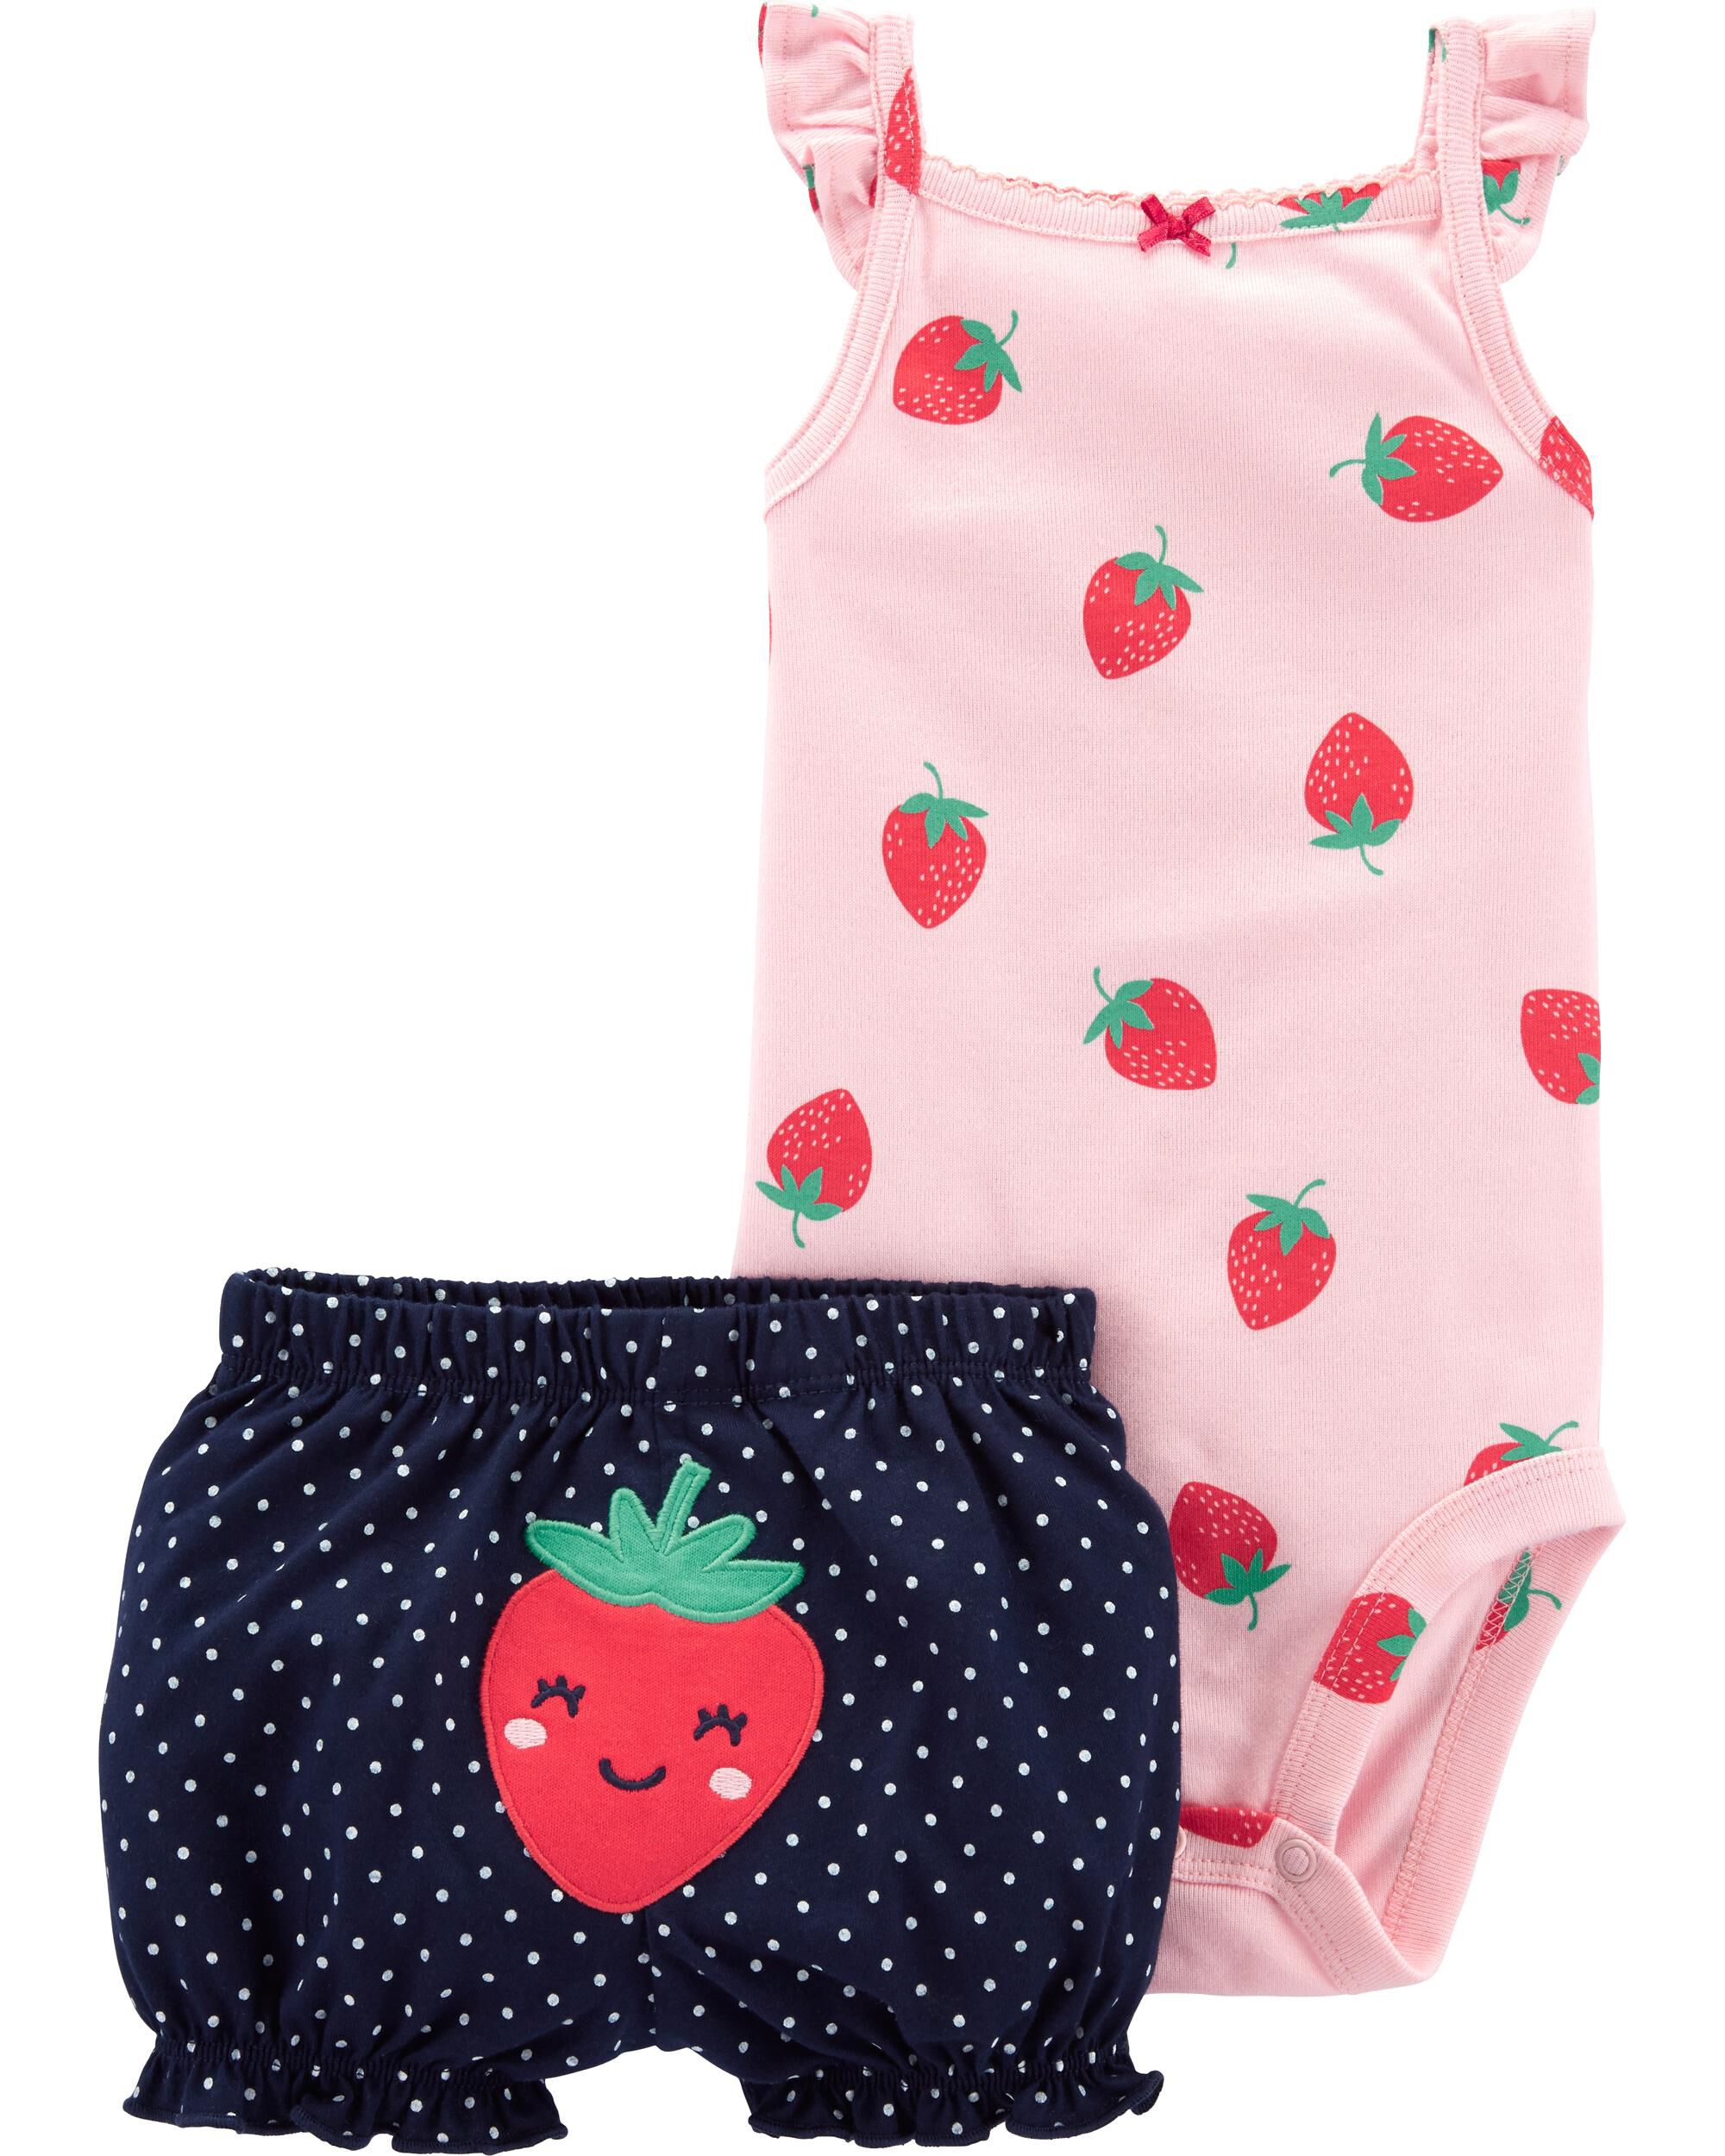 strawberry newborn outfit